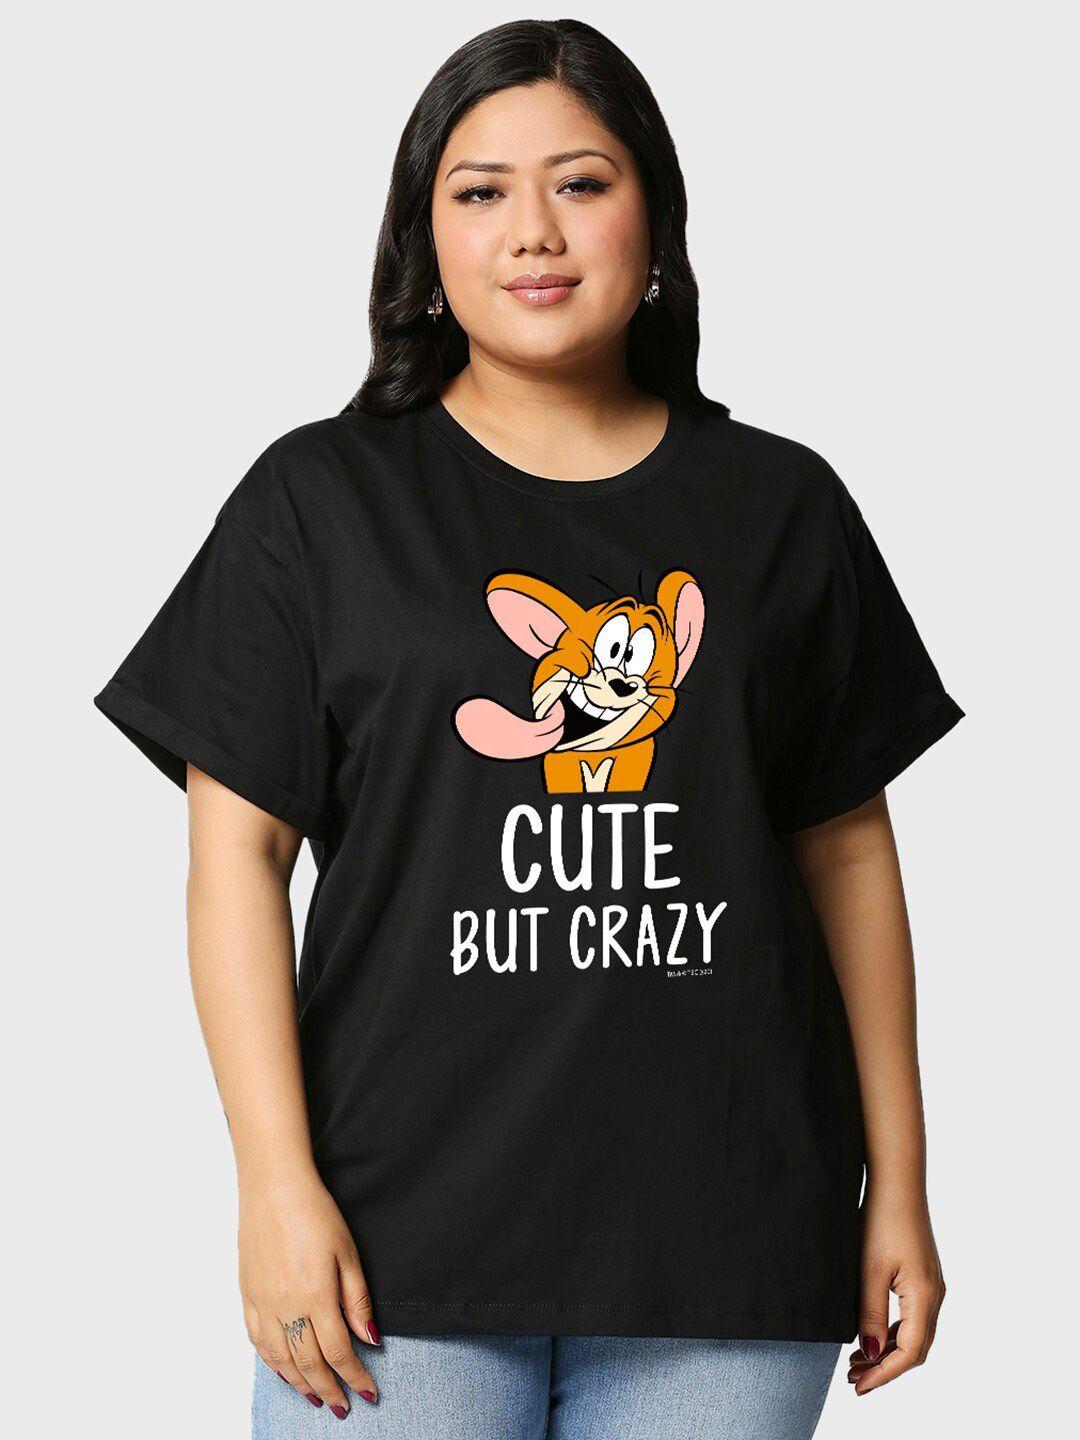 bewakoof x official tom & jerry merchandise cute but crazy printed plus size t-shirt